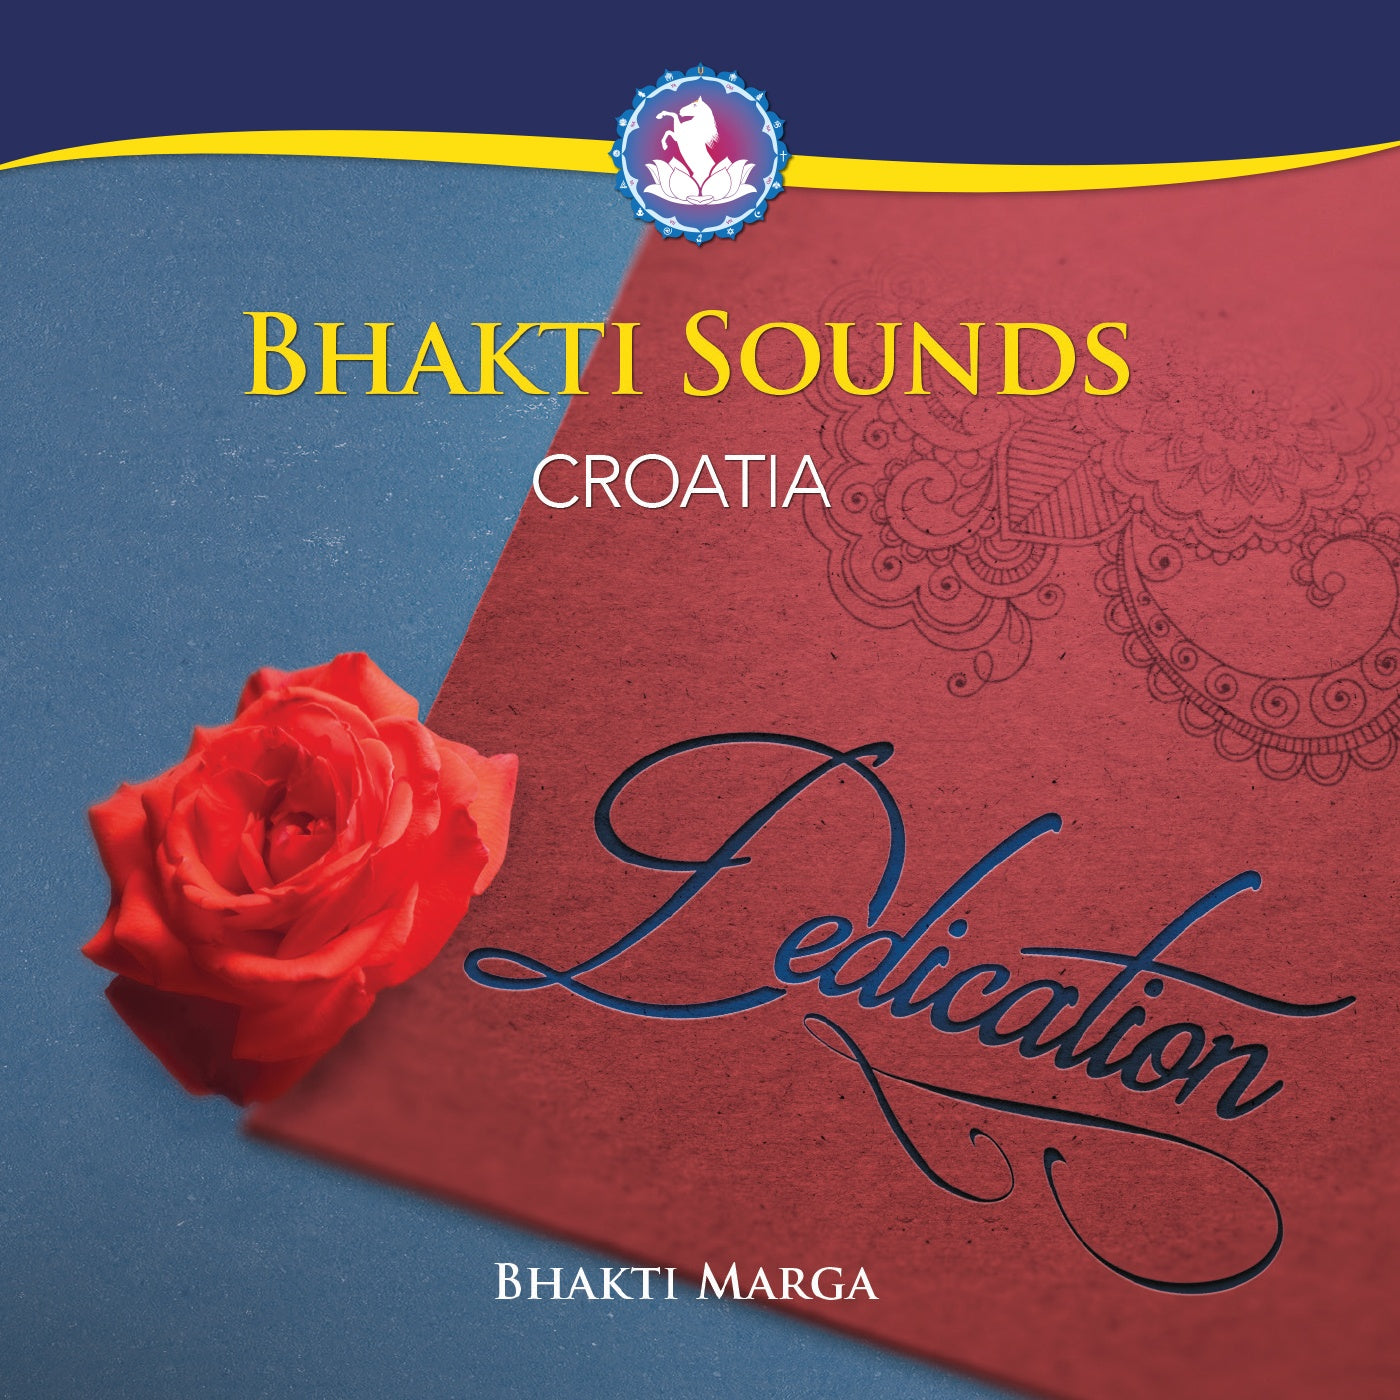 Bhakti Sounds Croatia: Dedication